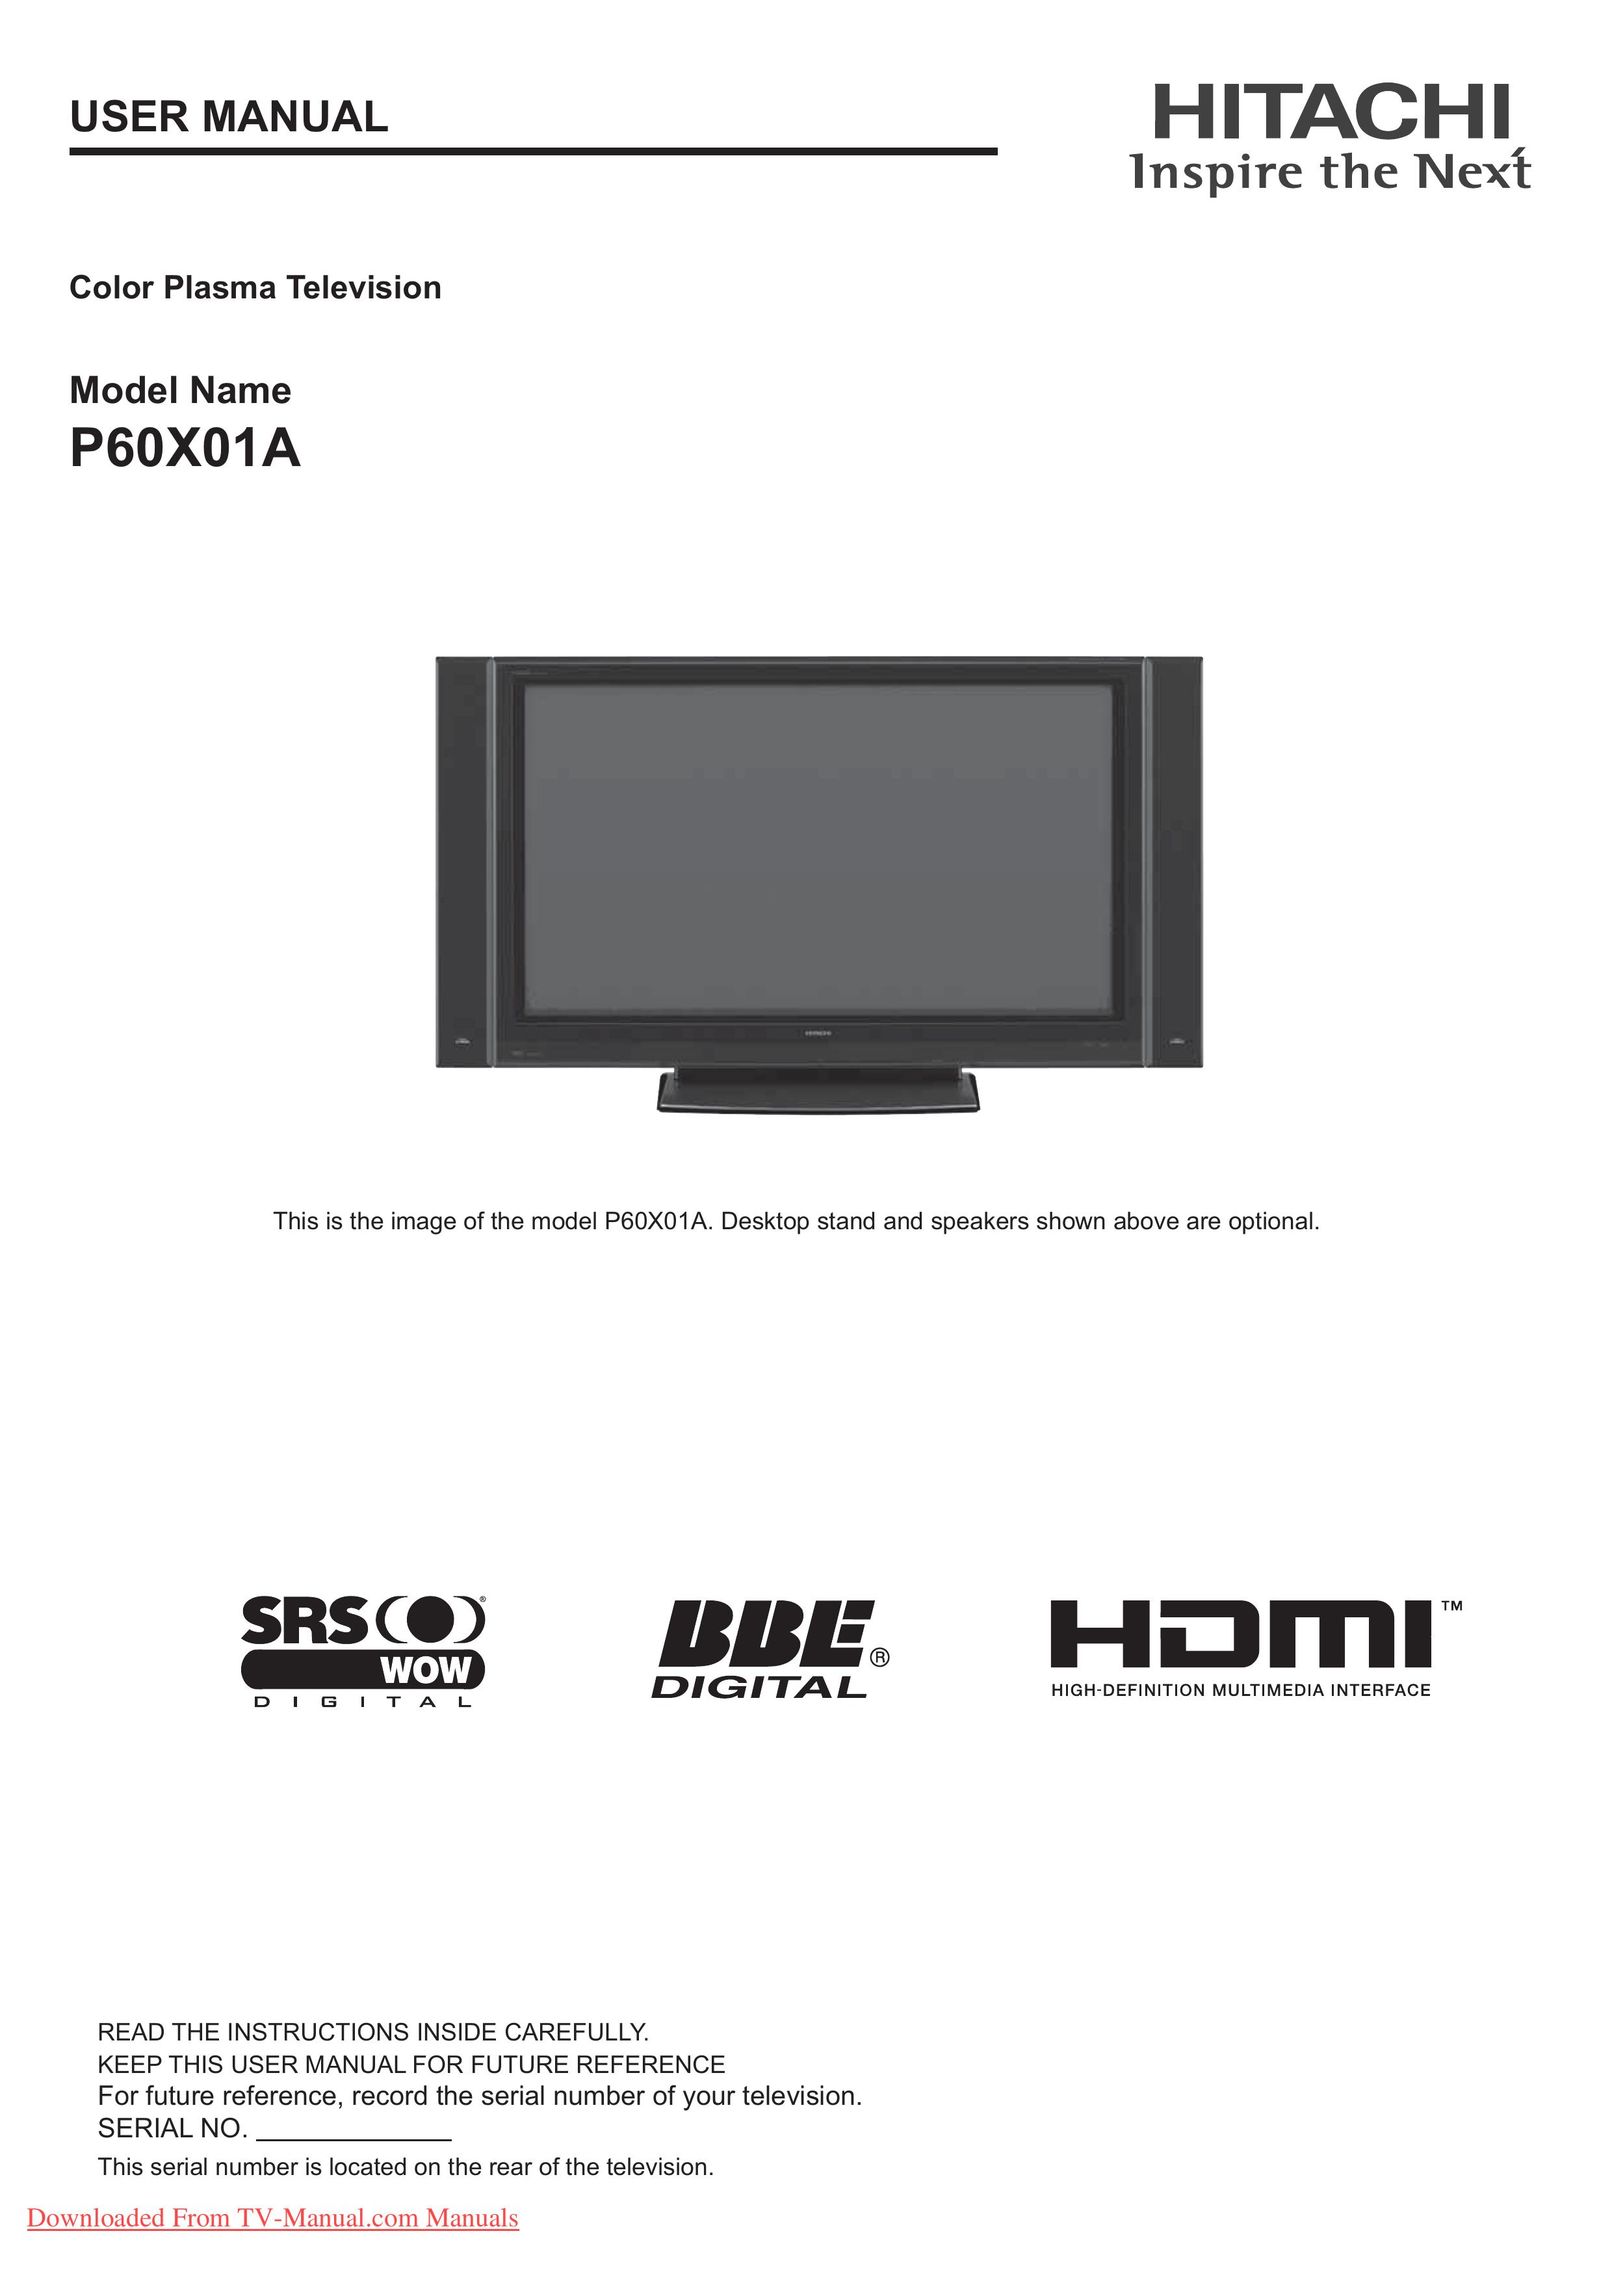 Hitachi P60X01A TV Antenna User Manual